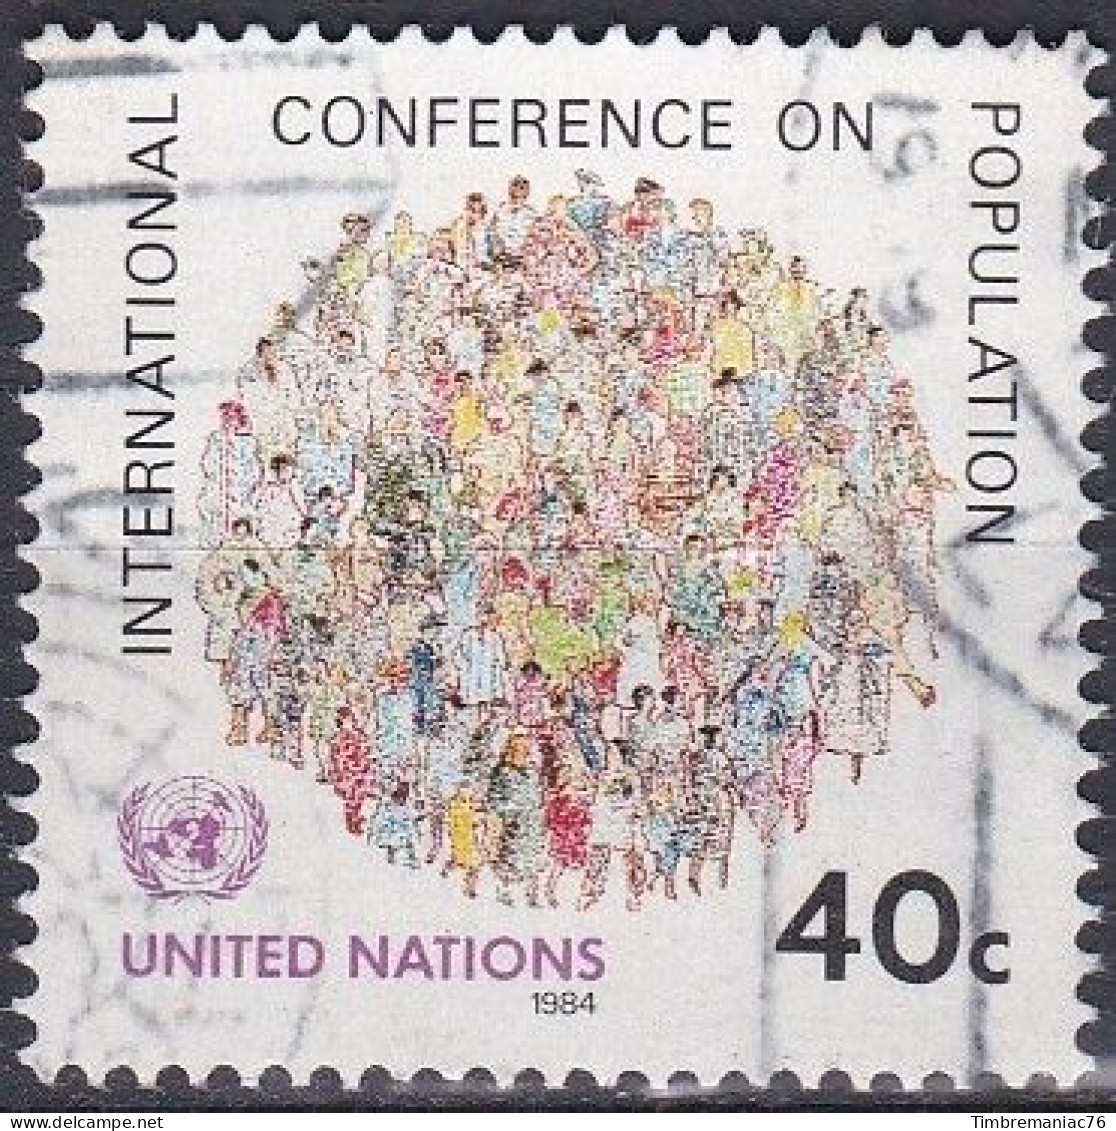 Nations Unies N.Y. 1984 YT 409 Oblitéré - Nuovi